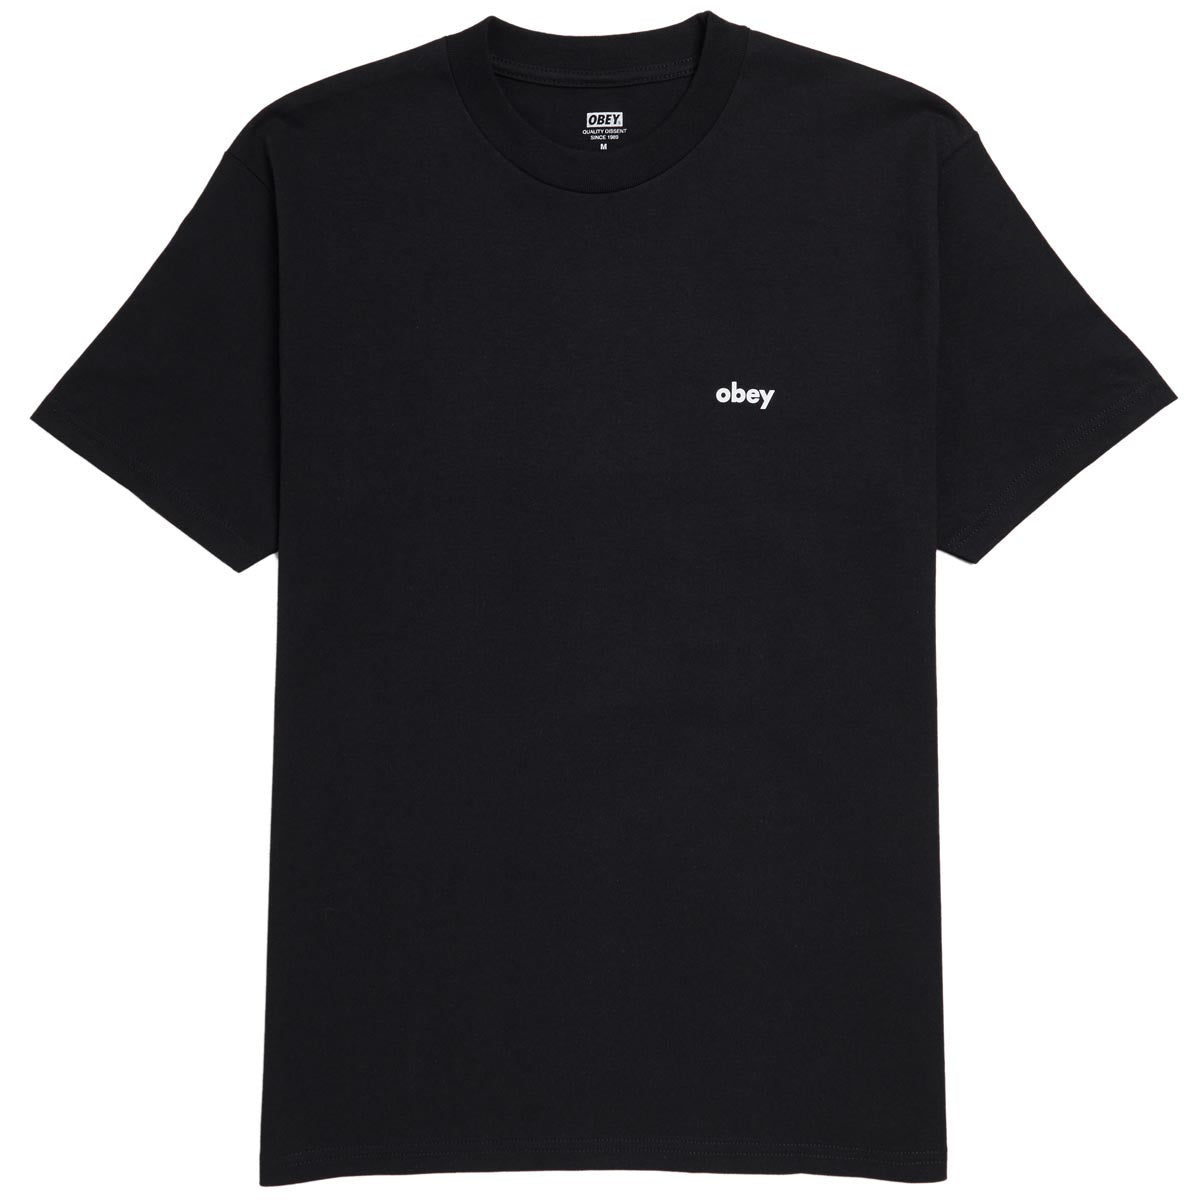 Obey NYC Smog T-Shirt - Black image 2